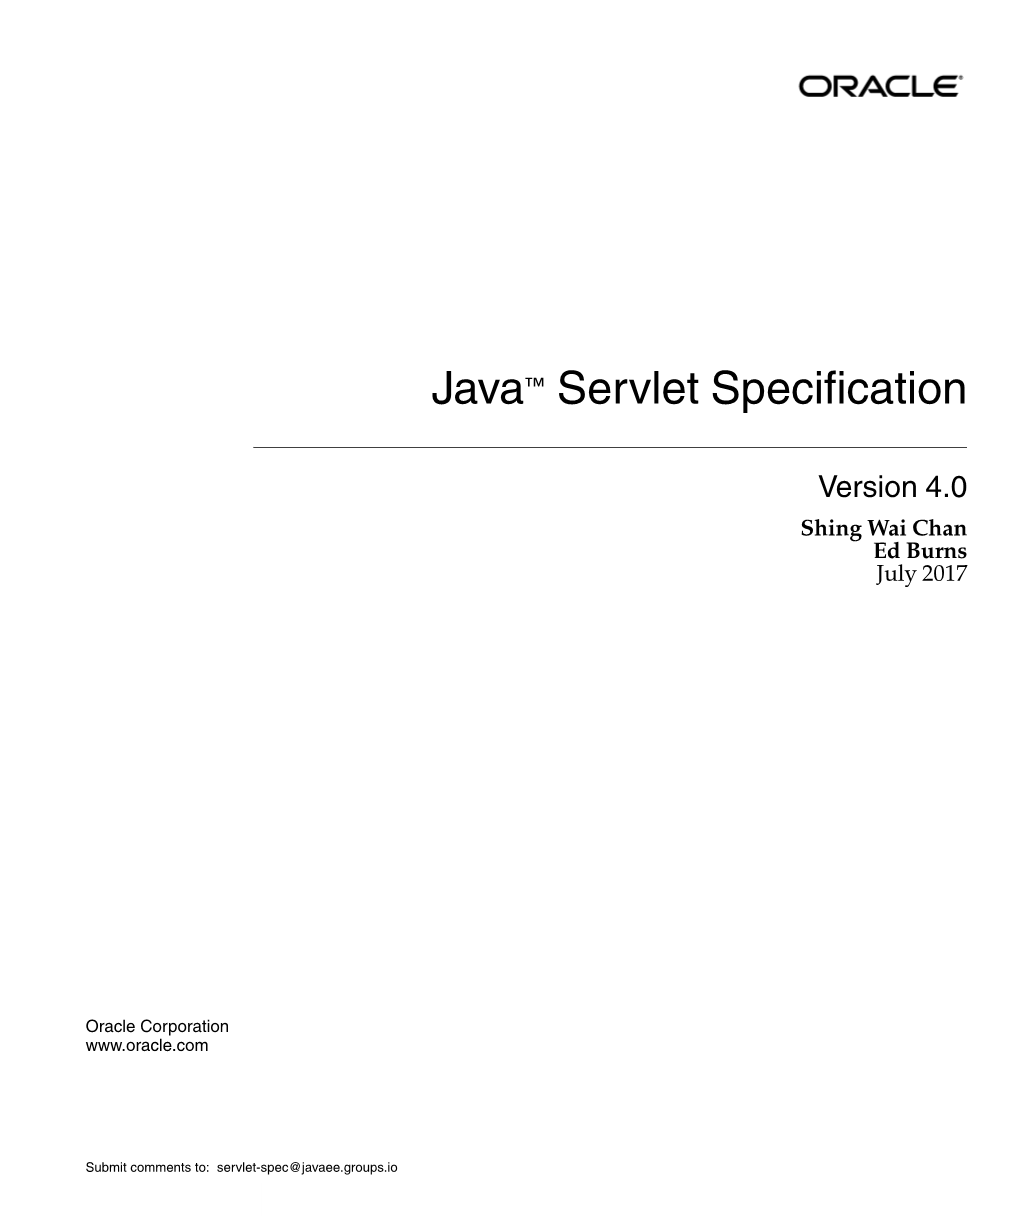 Java™ Servlet Specification, Version 4.0